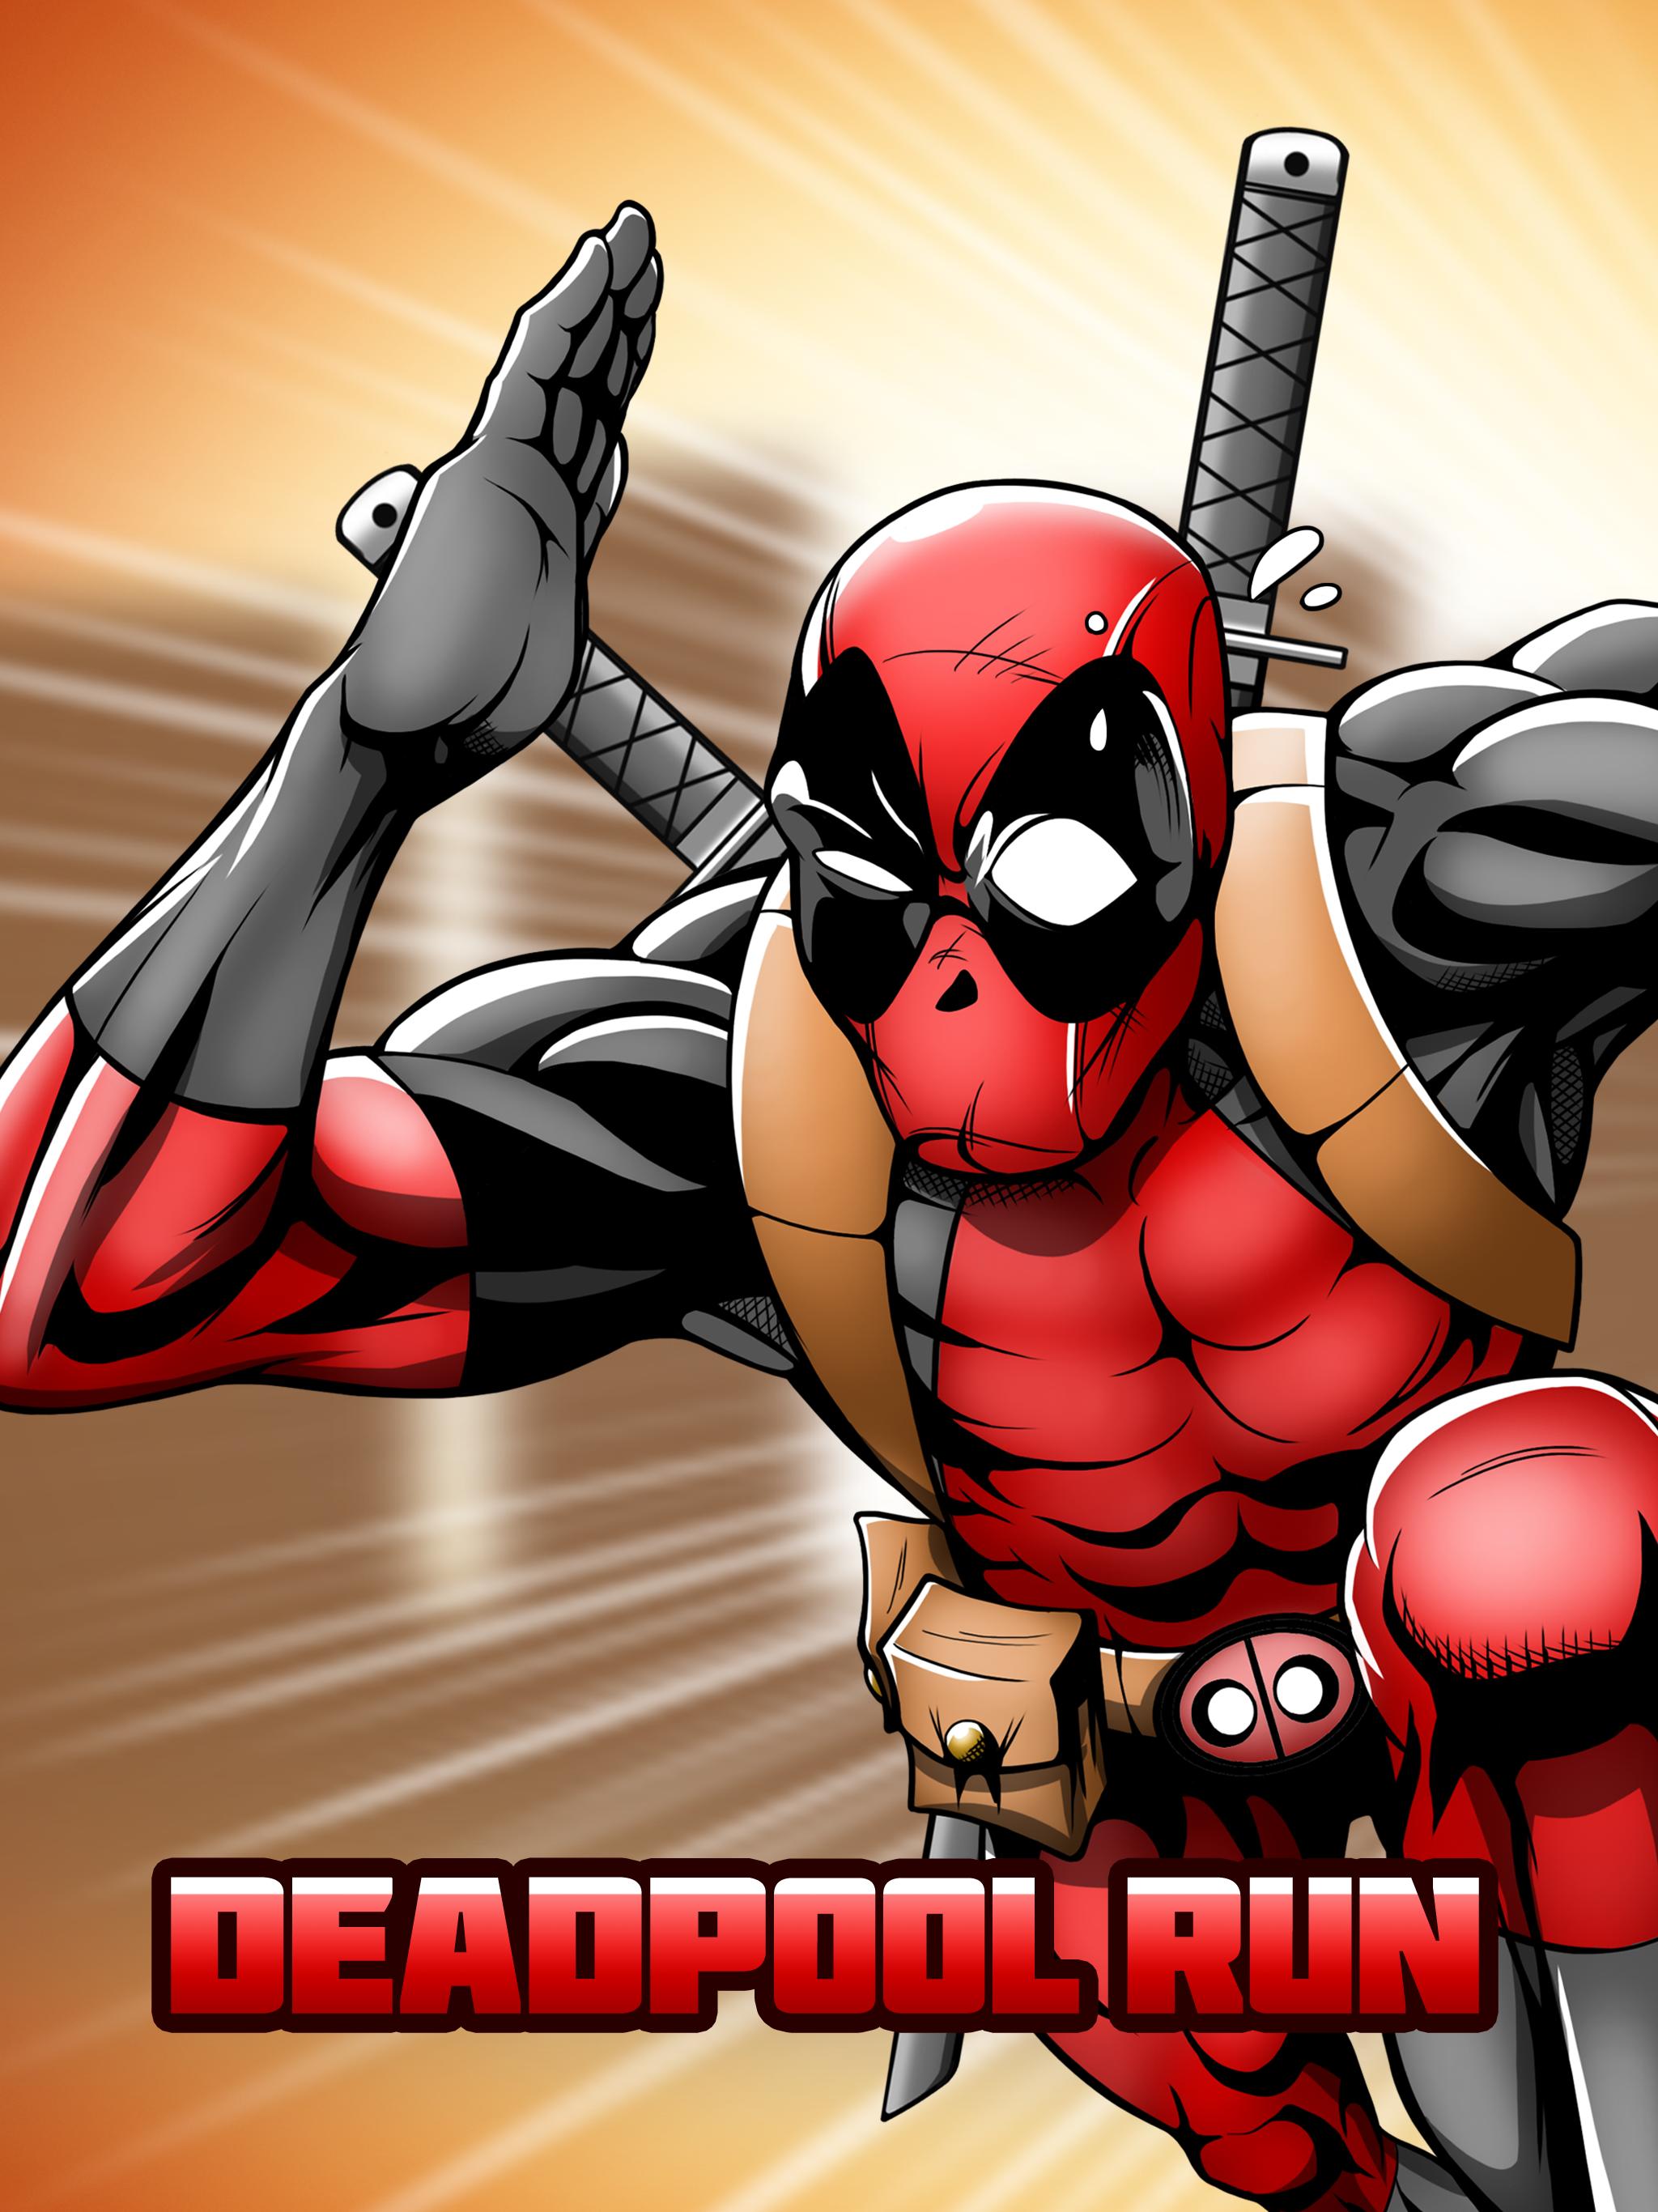 Deadpool Run For Android Apk Download - roblox deadpool videos